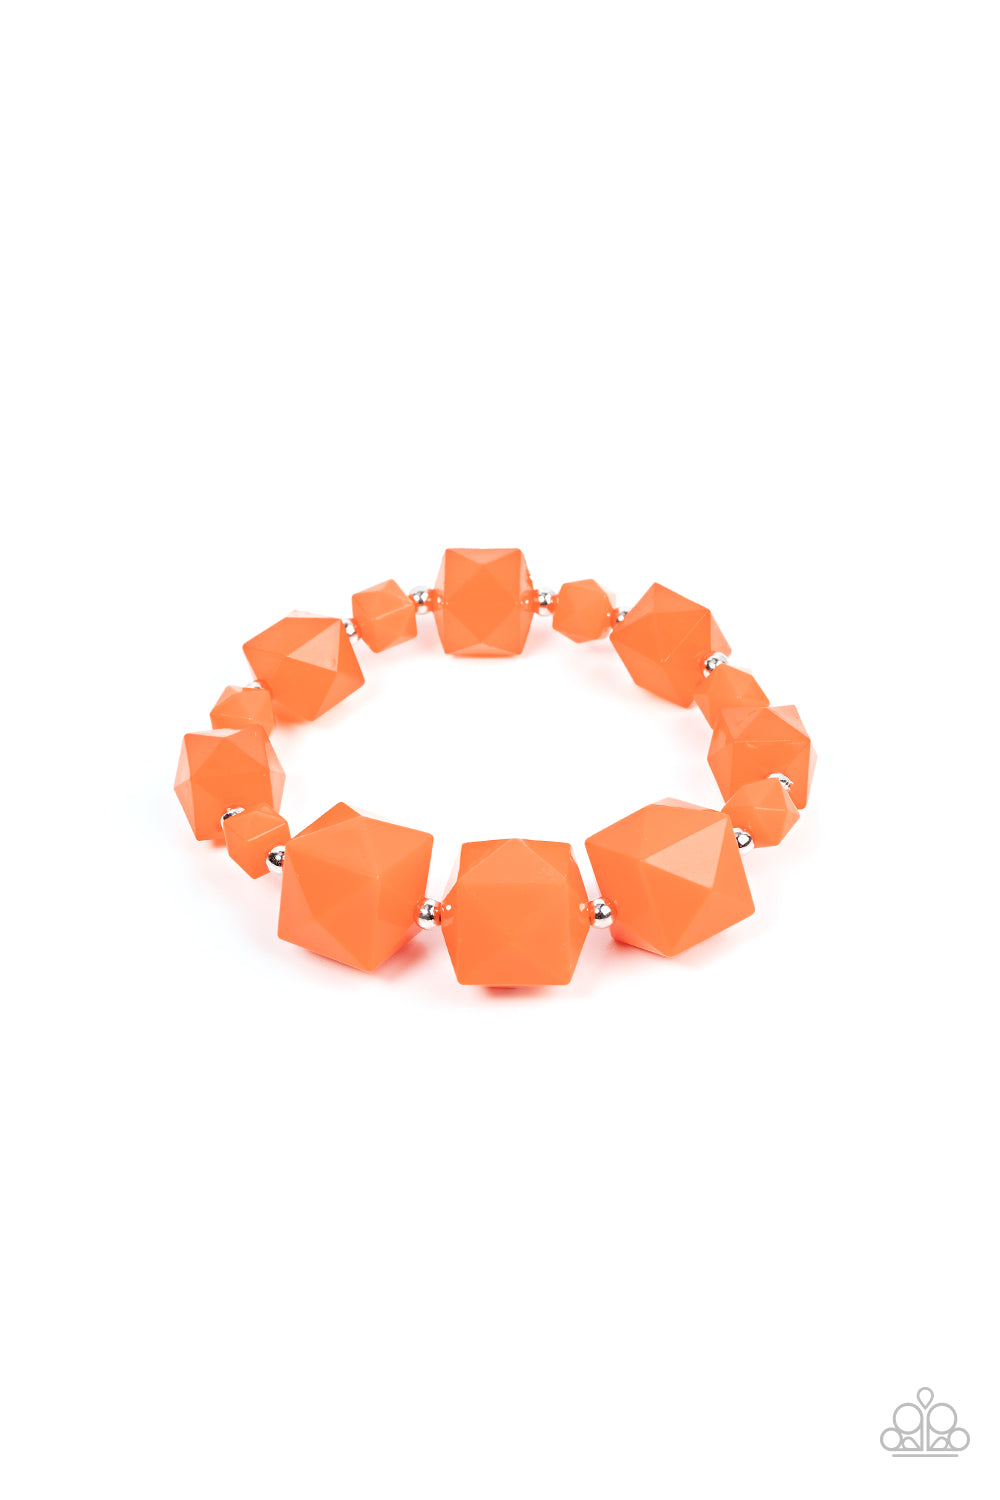 Trendsetting Tourist - Orange Bracelet freeshipping - JewLz4u Gemstone Gallery